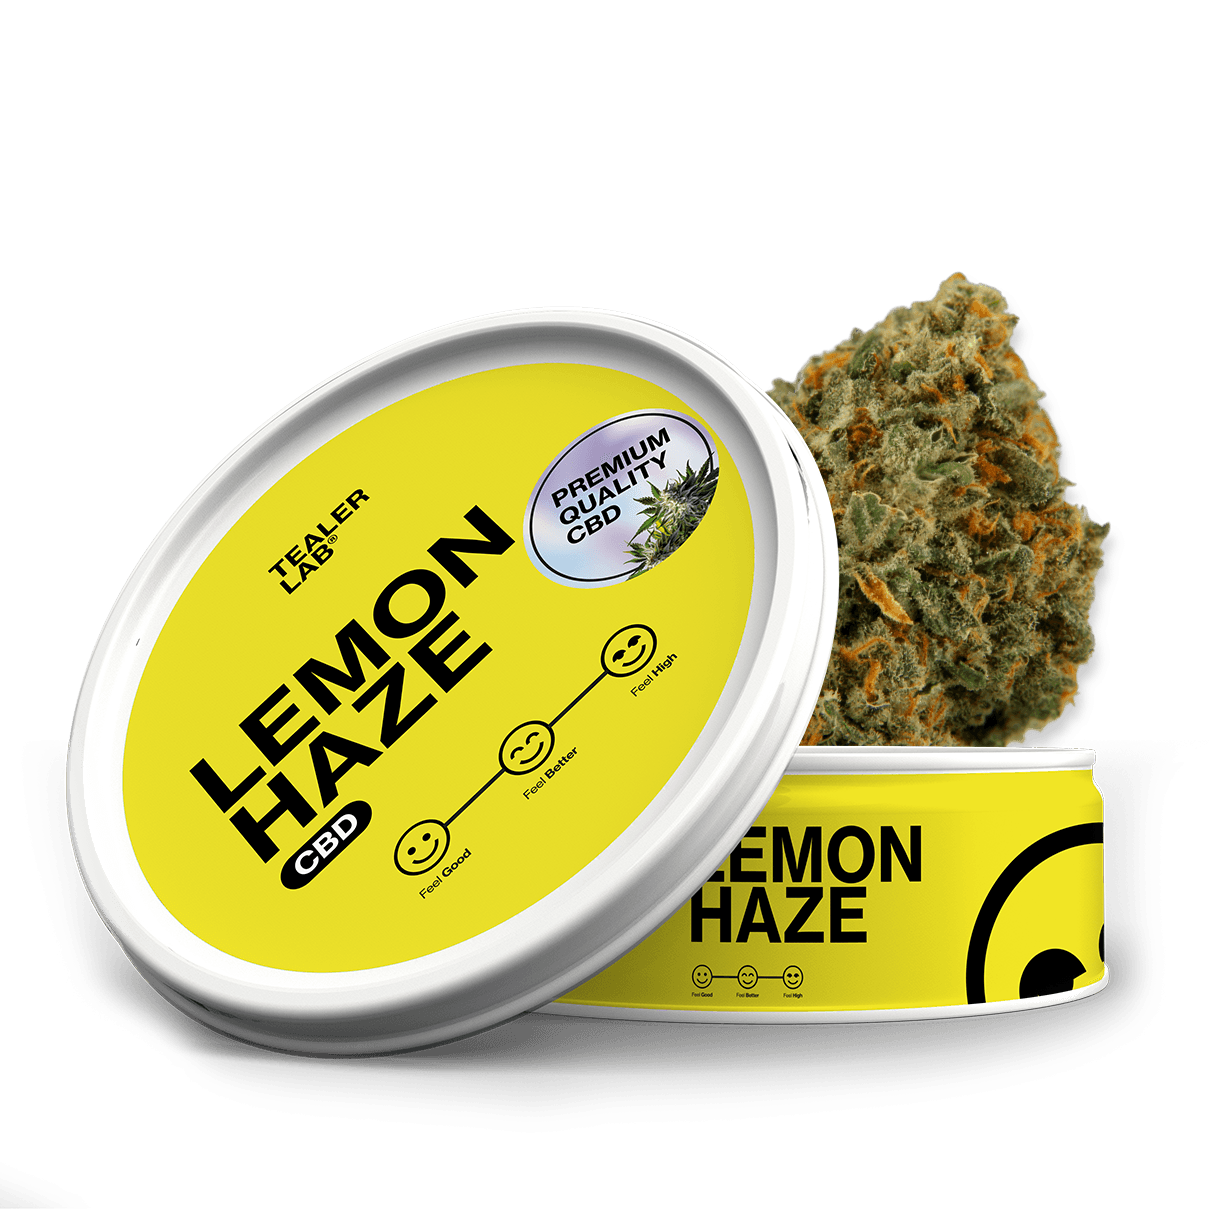 Lemon Haze Calilab - Fleur CBD | Tealerlab